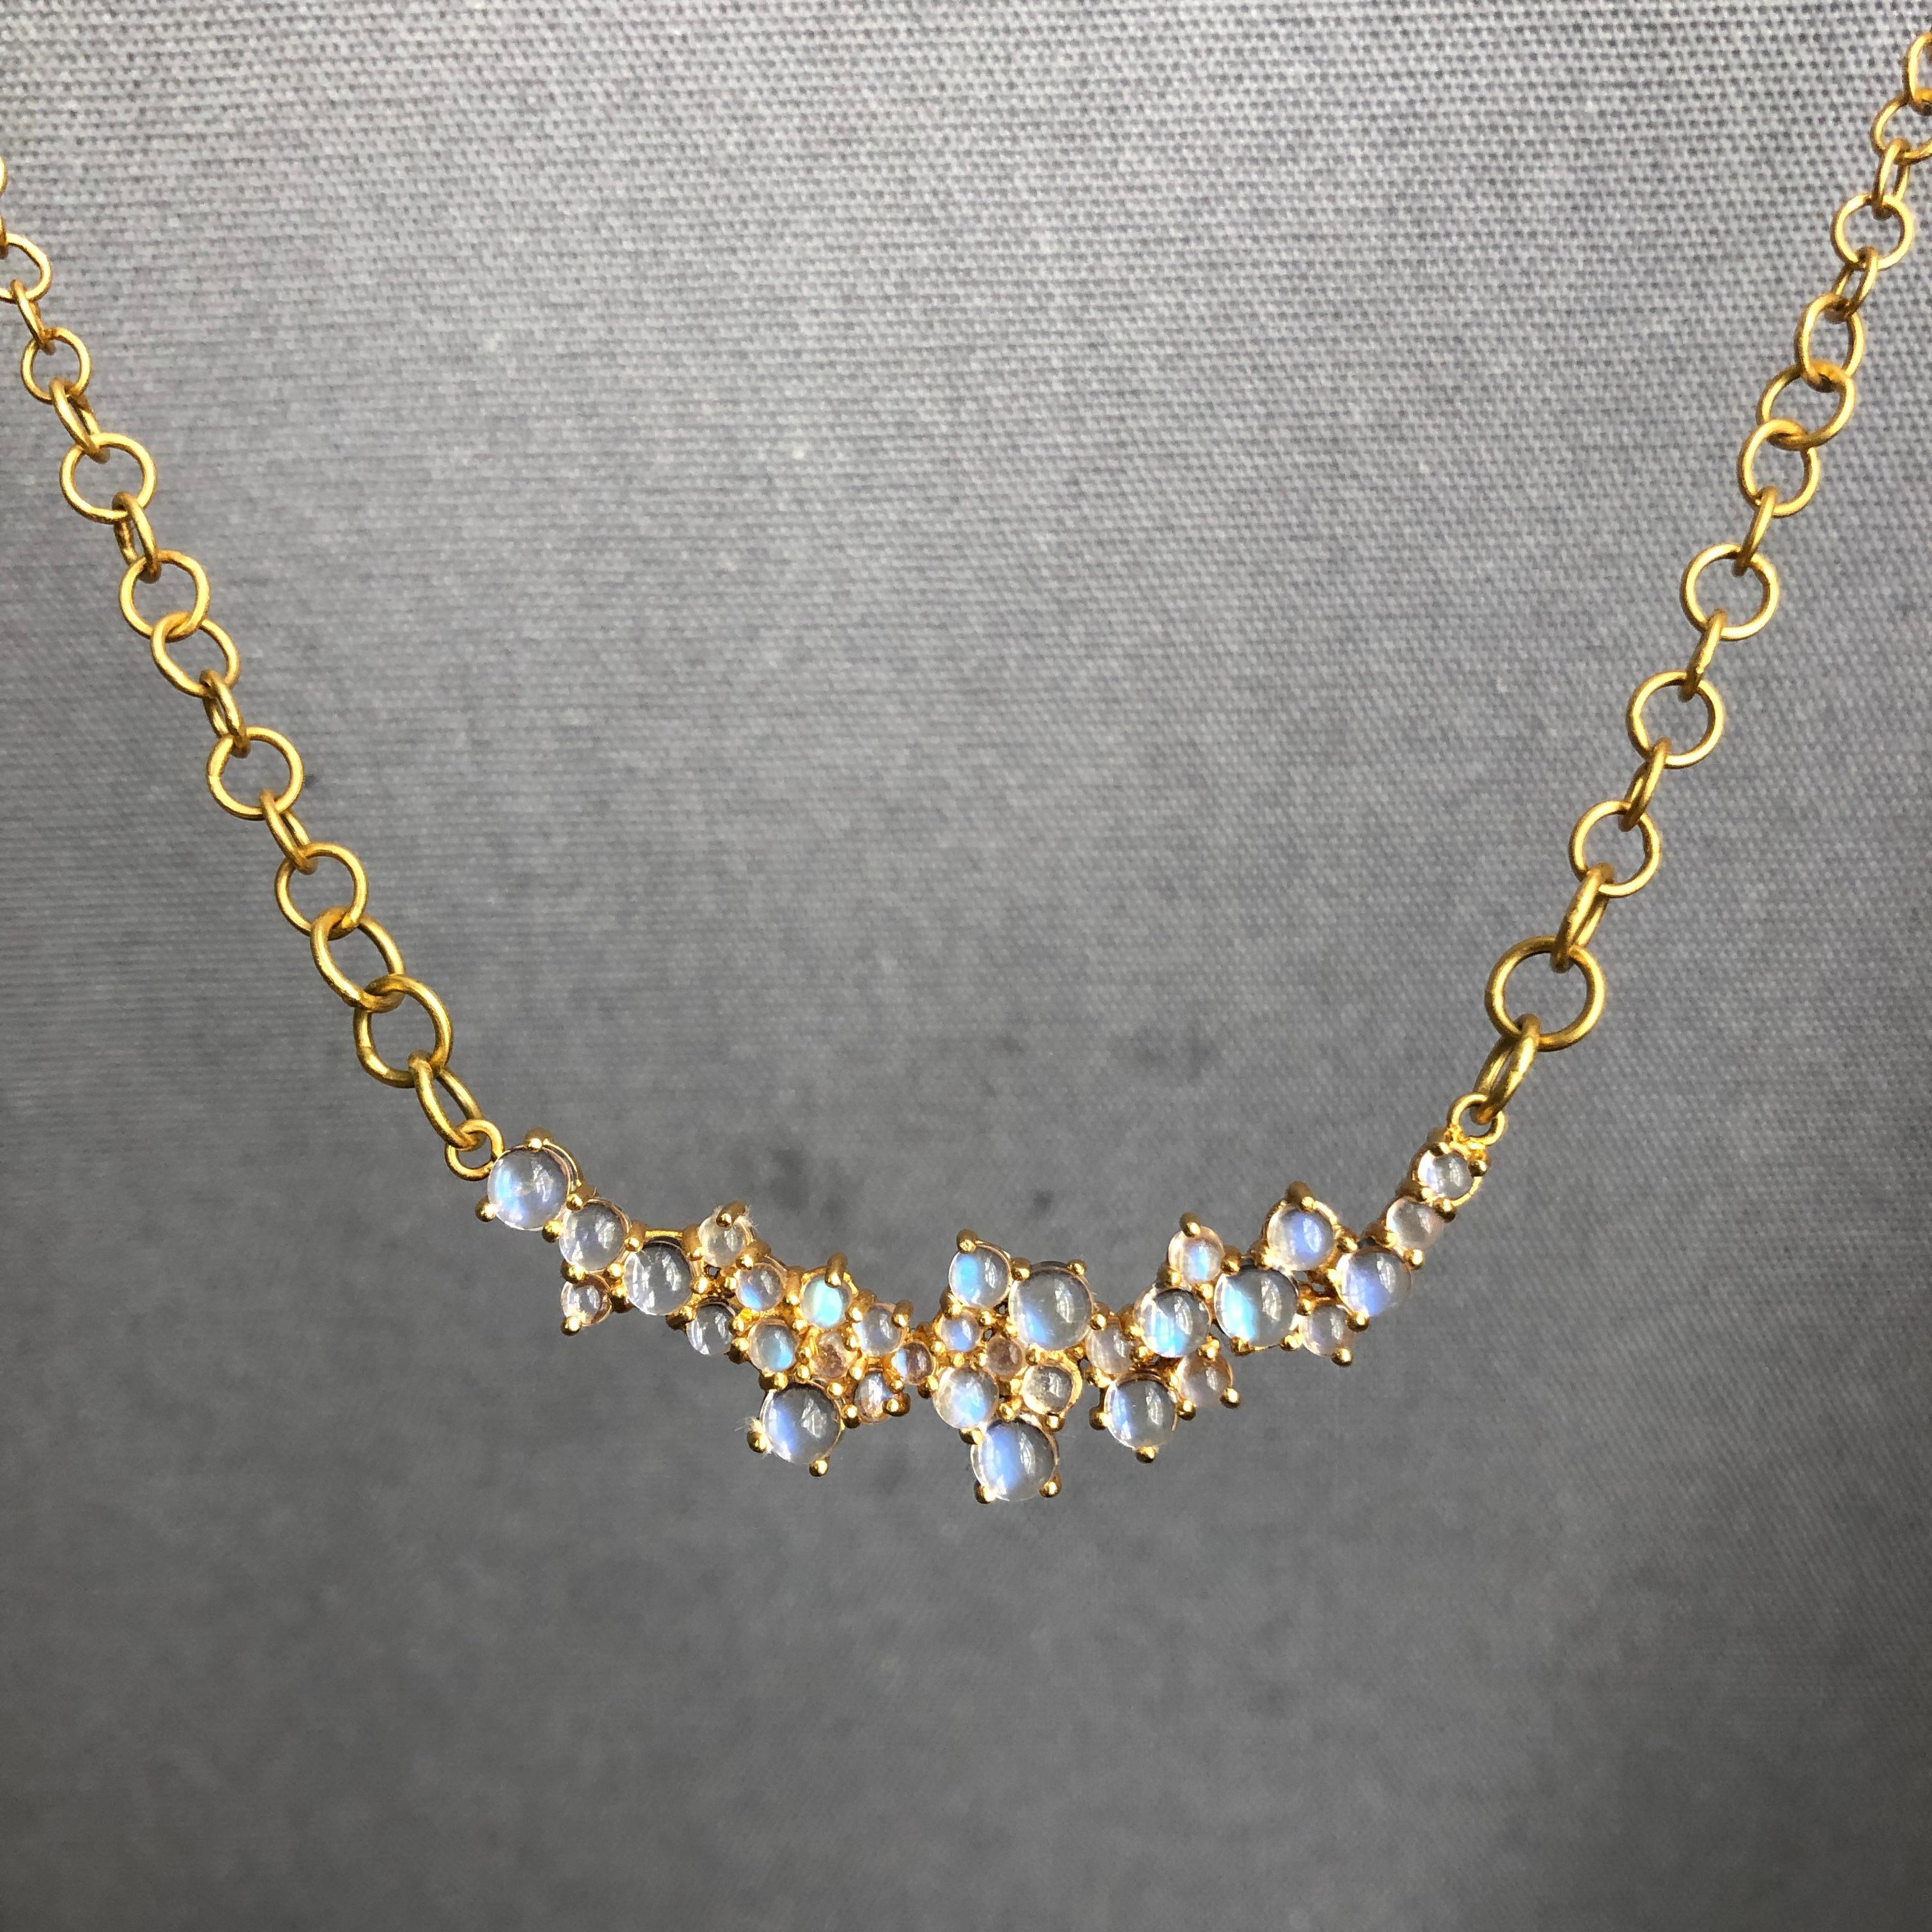 3.79 Carat Rainbow Moonstone Gold Necklace by Lauren Harper For Sale 2